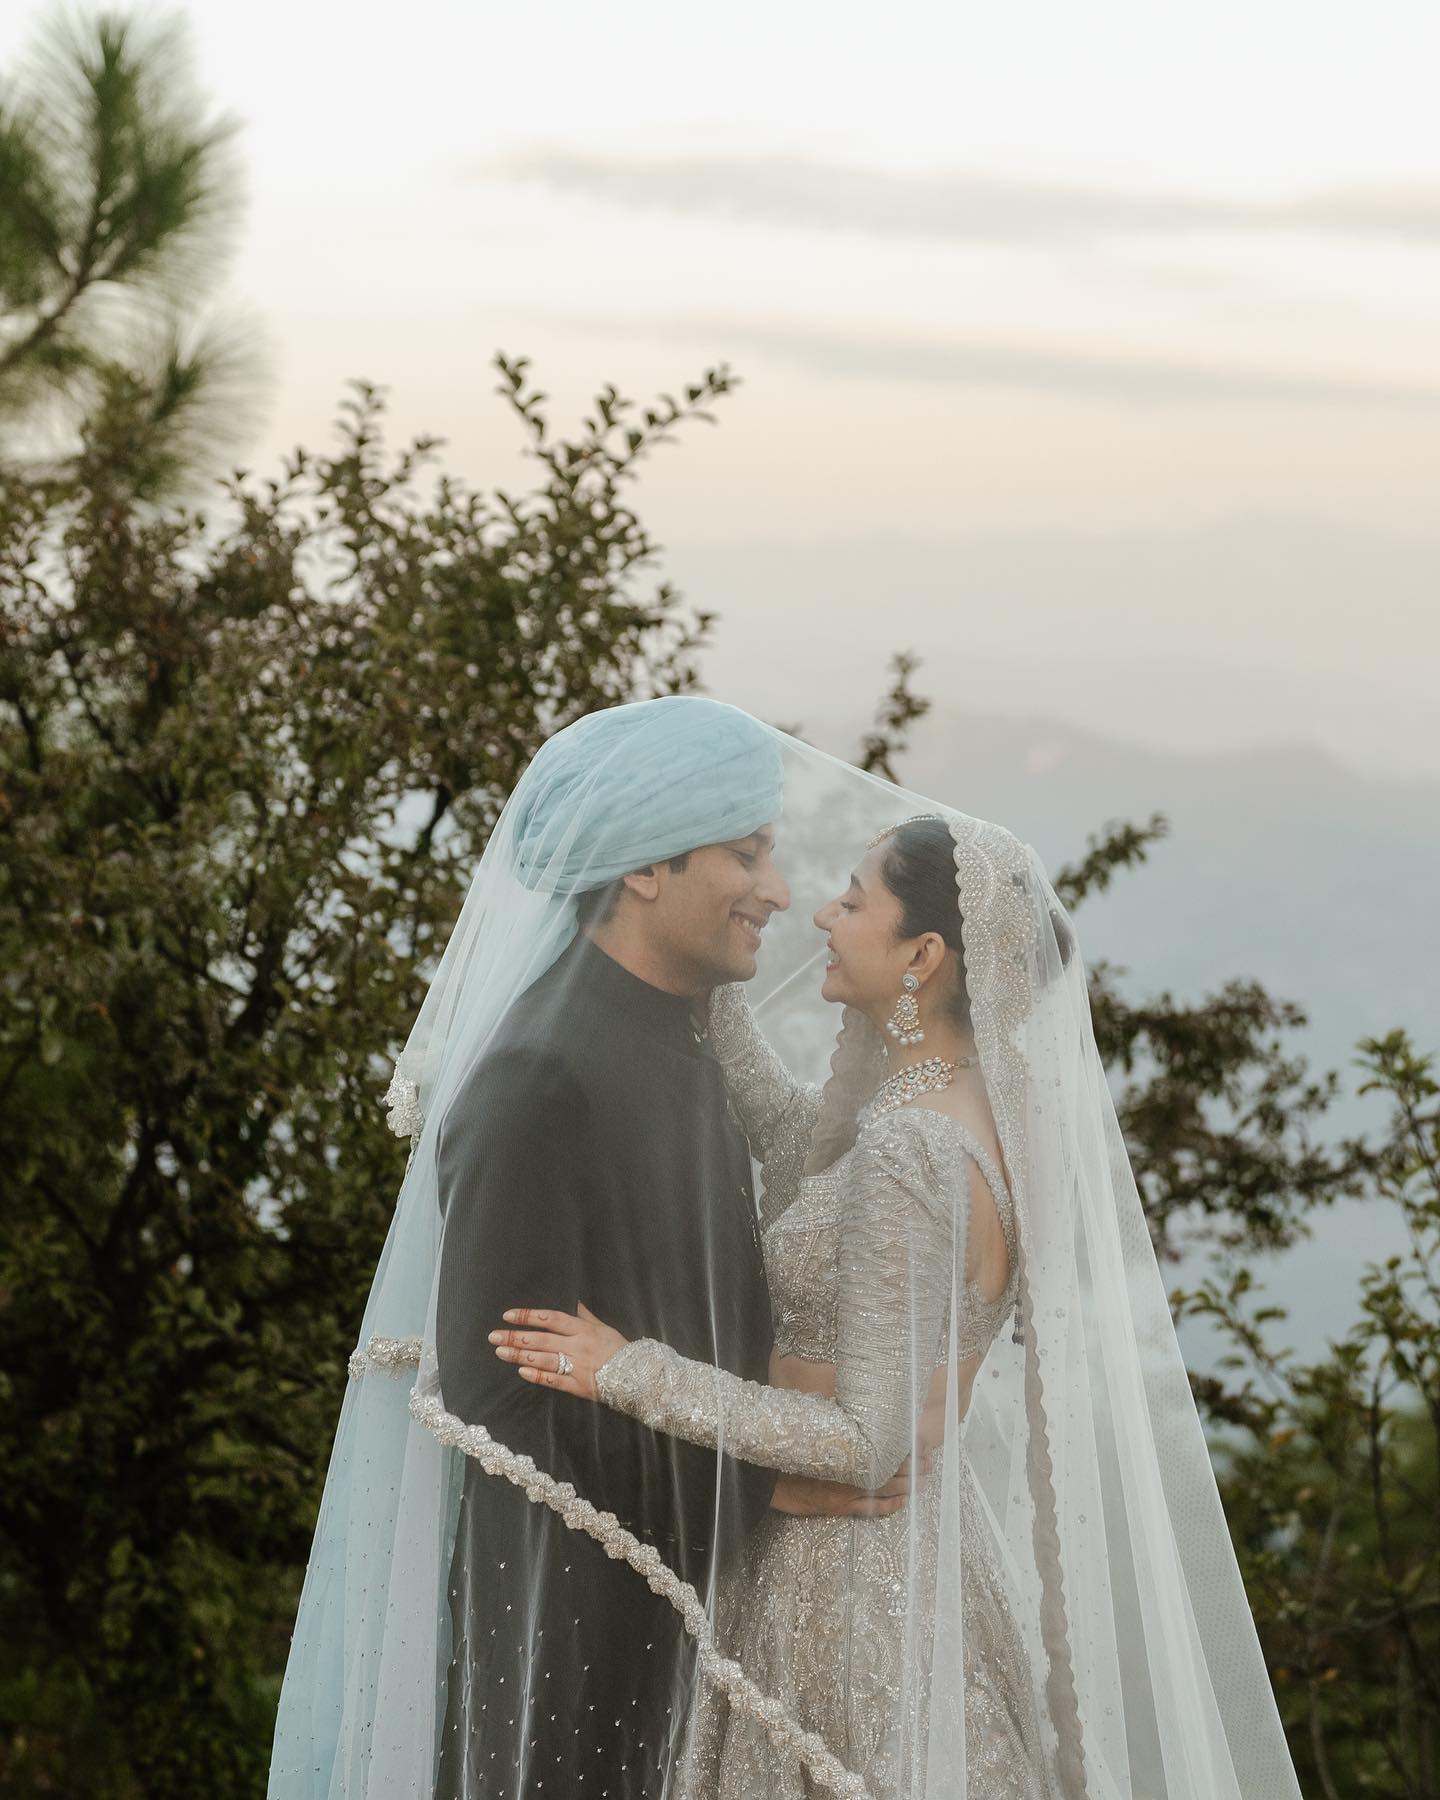 Mahira Khan Looked Ethereal As A Minimalistic Bride